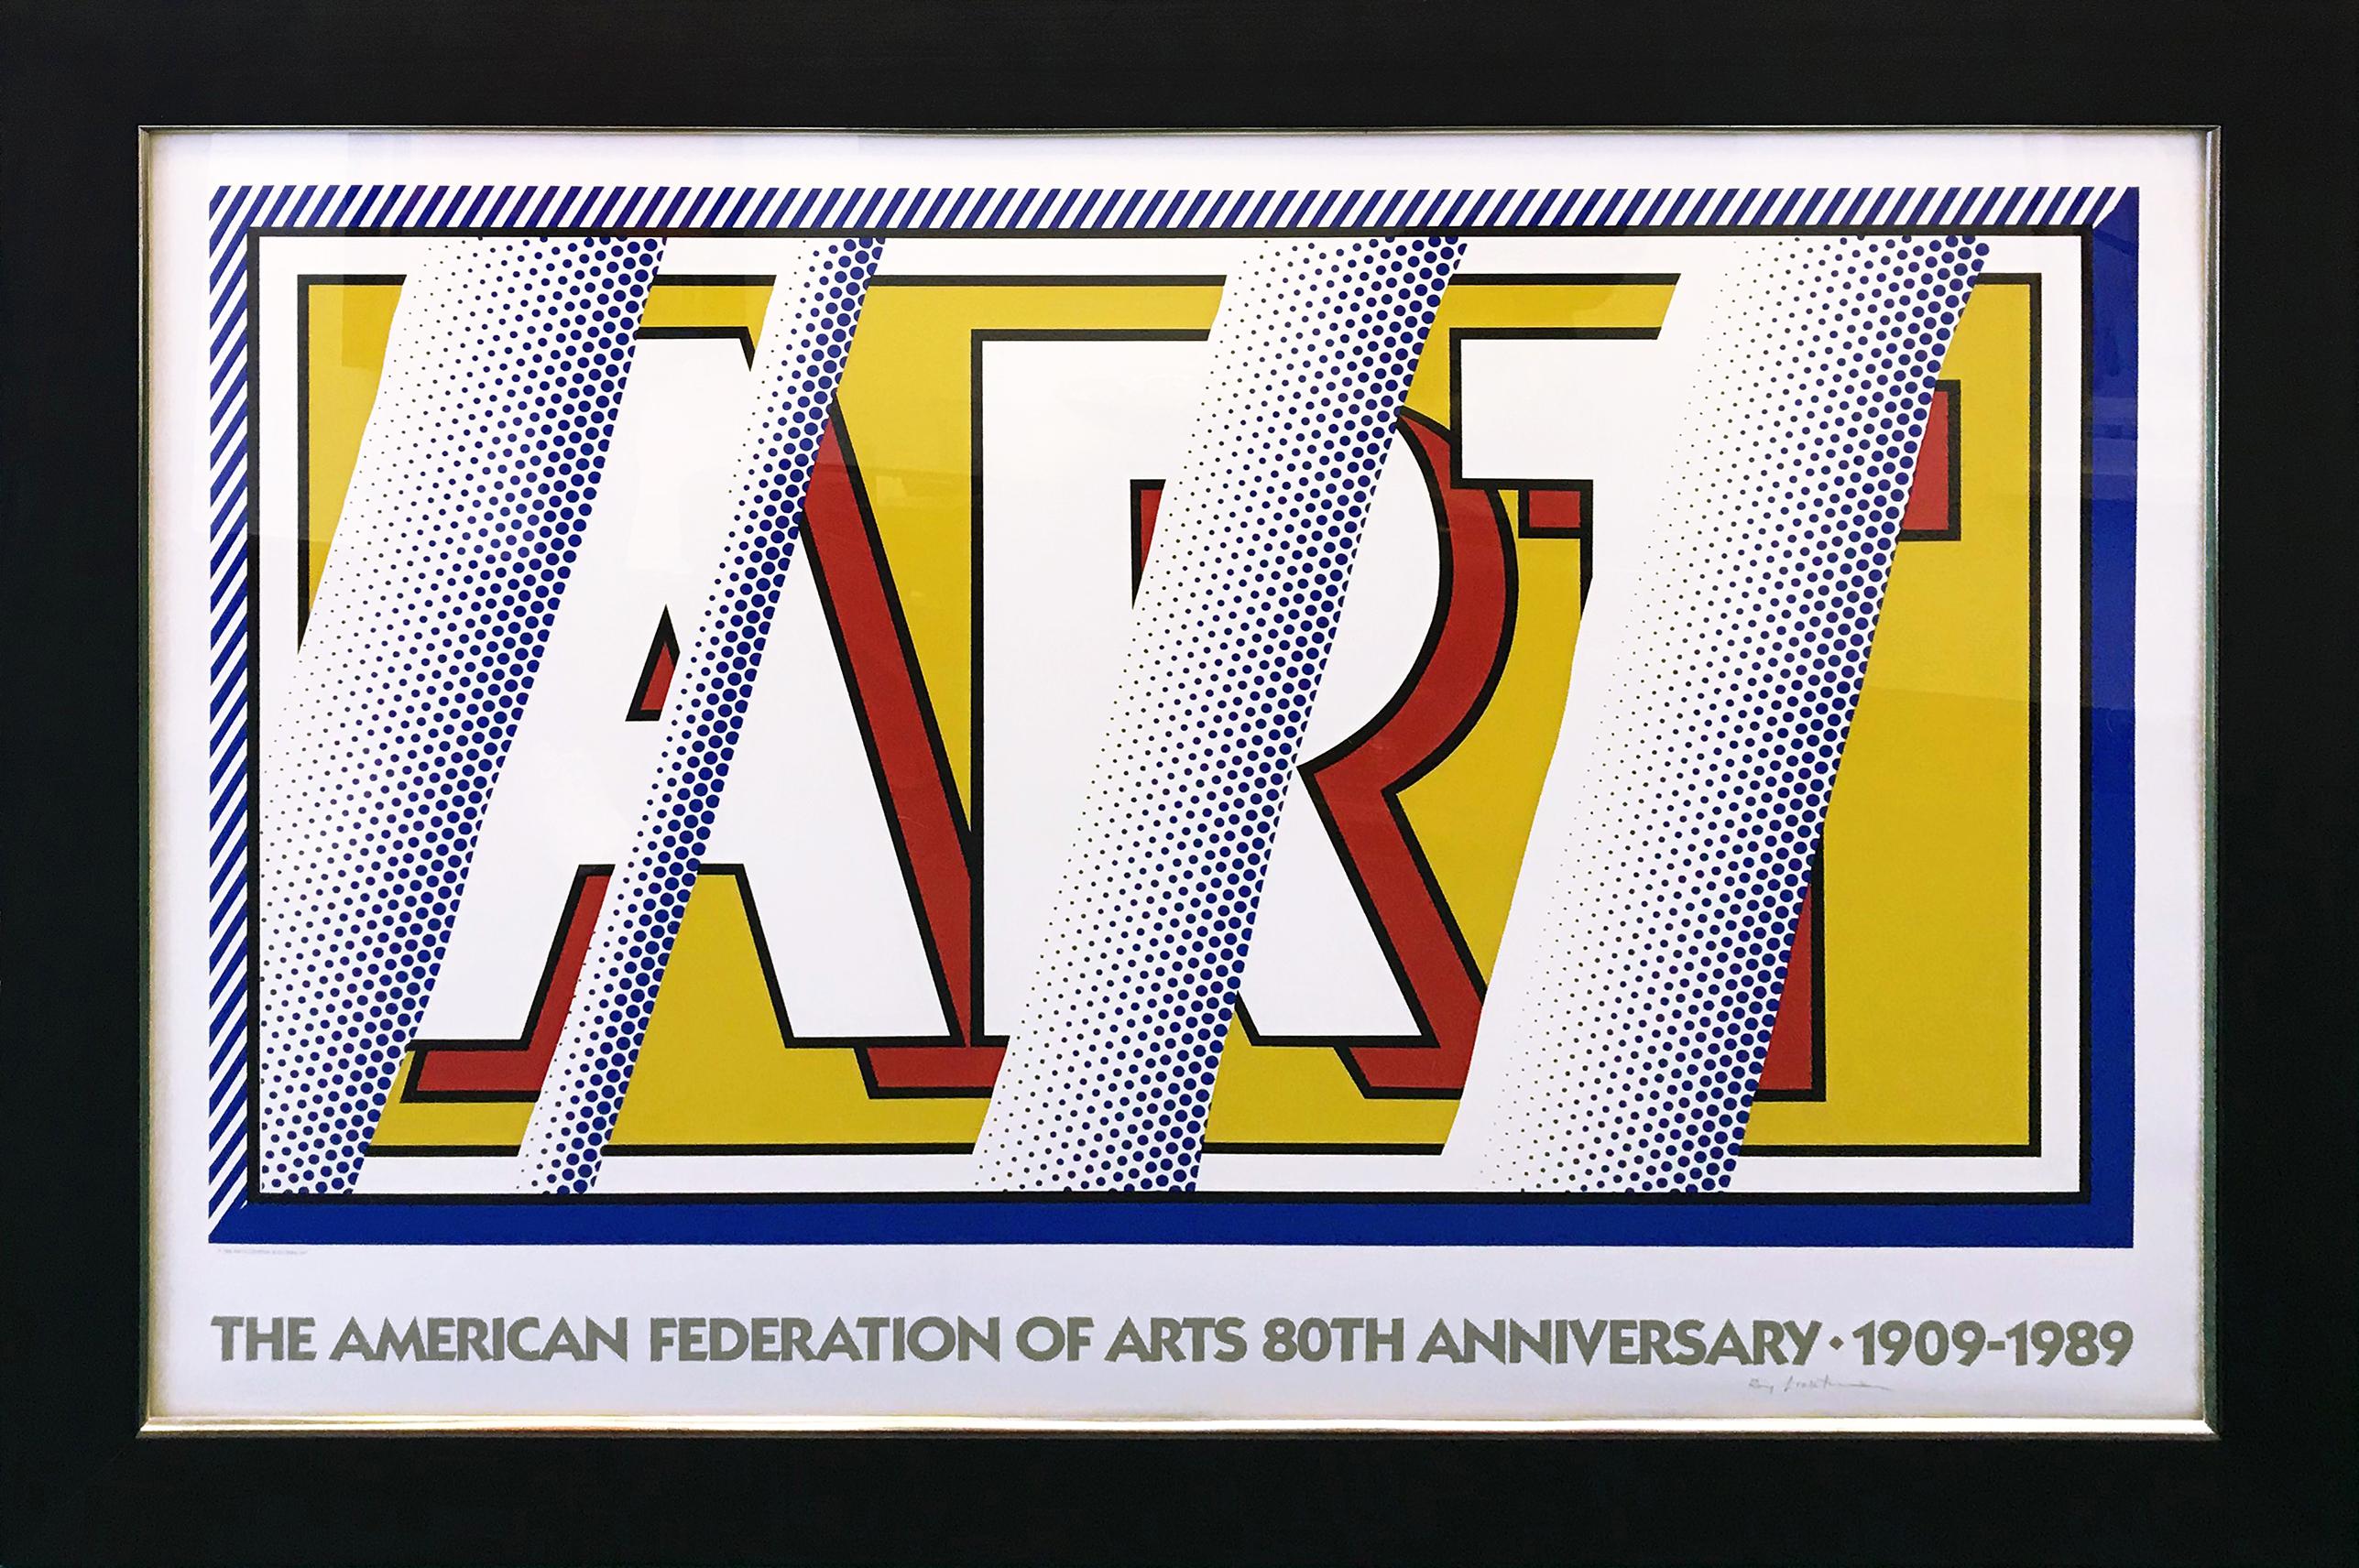 ART: THE AMERICAN FEDERATION OF ARTS 80TH ANNIVERSARY - Print by Roy Lichtenstein